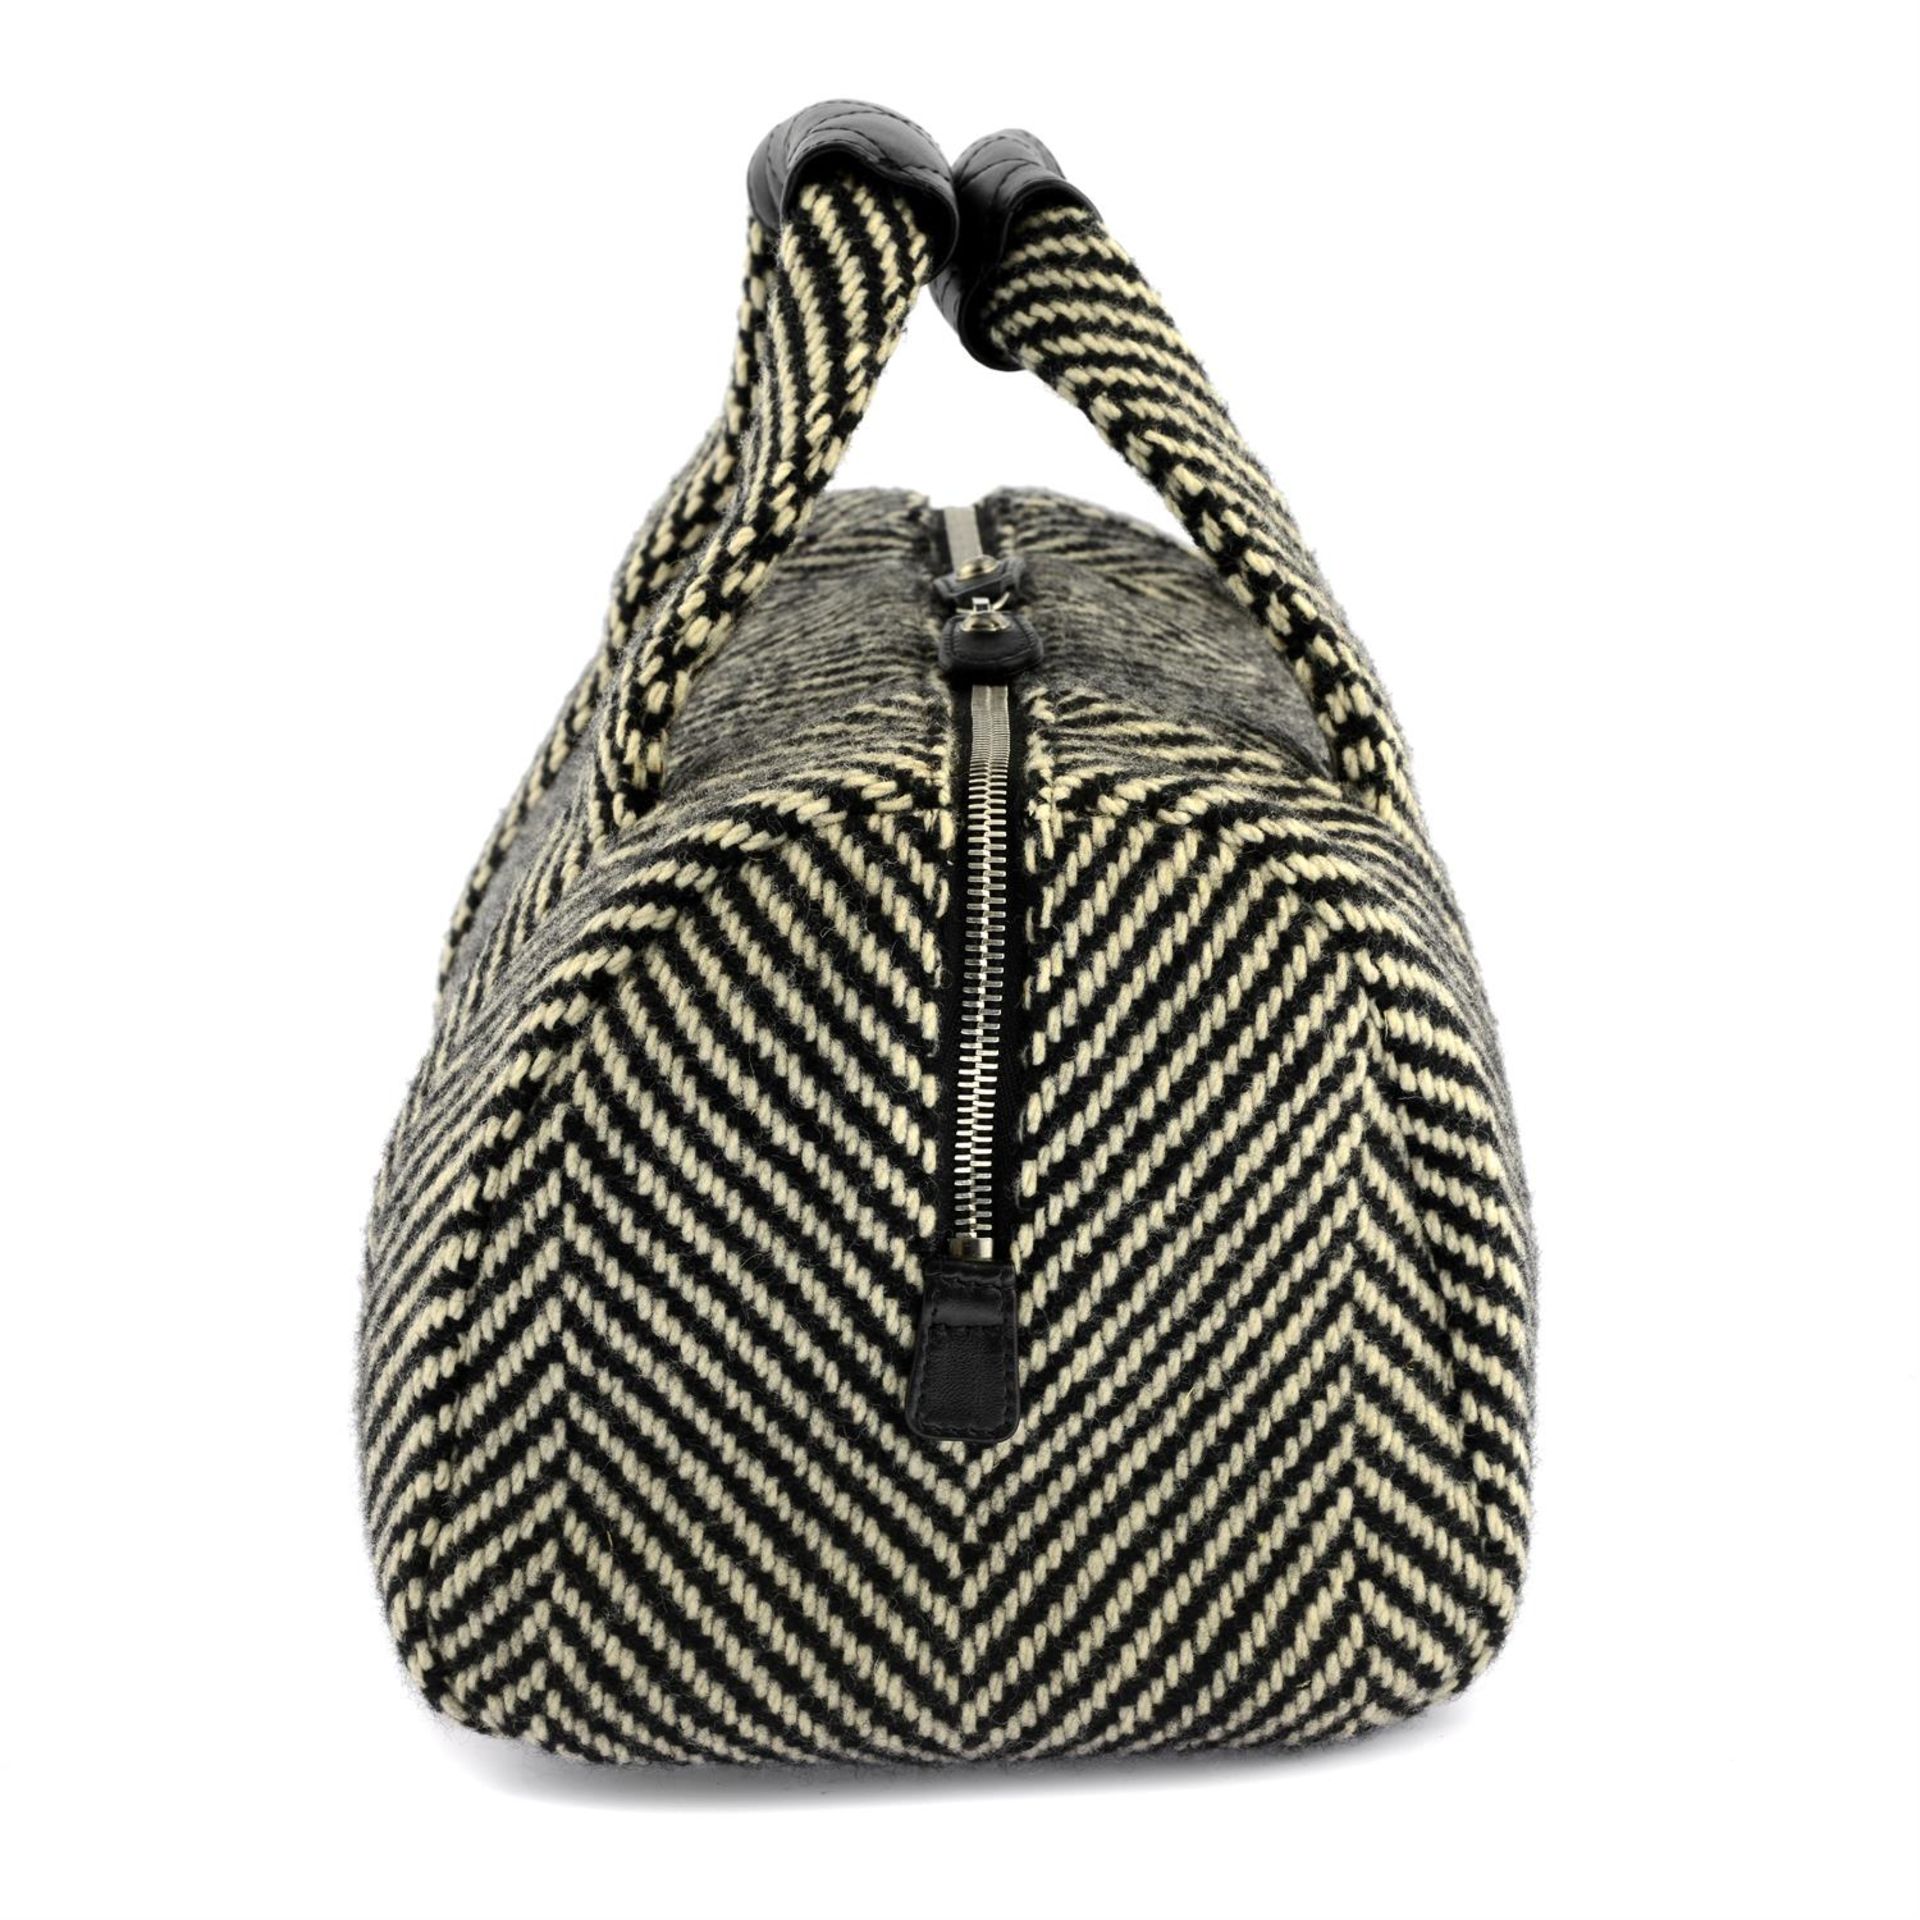 CHANEL - a chevron woven fabric handbag. - Image 4 of 5